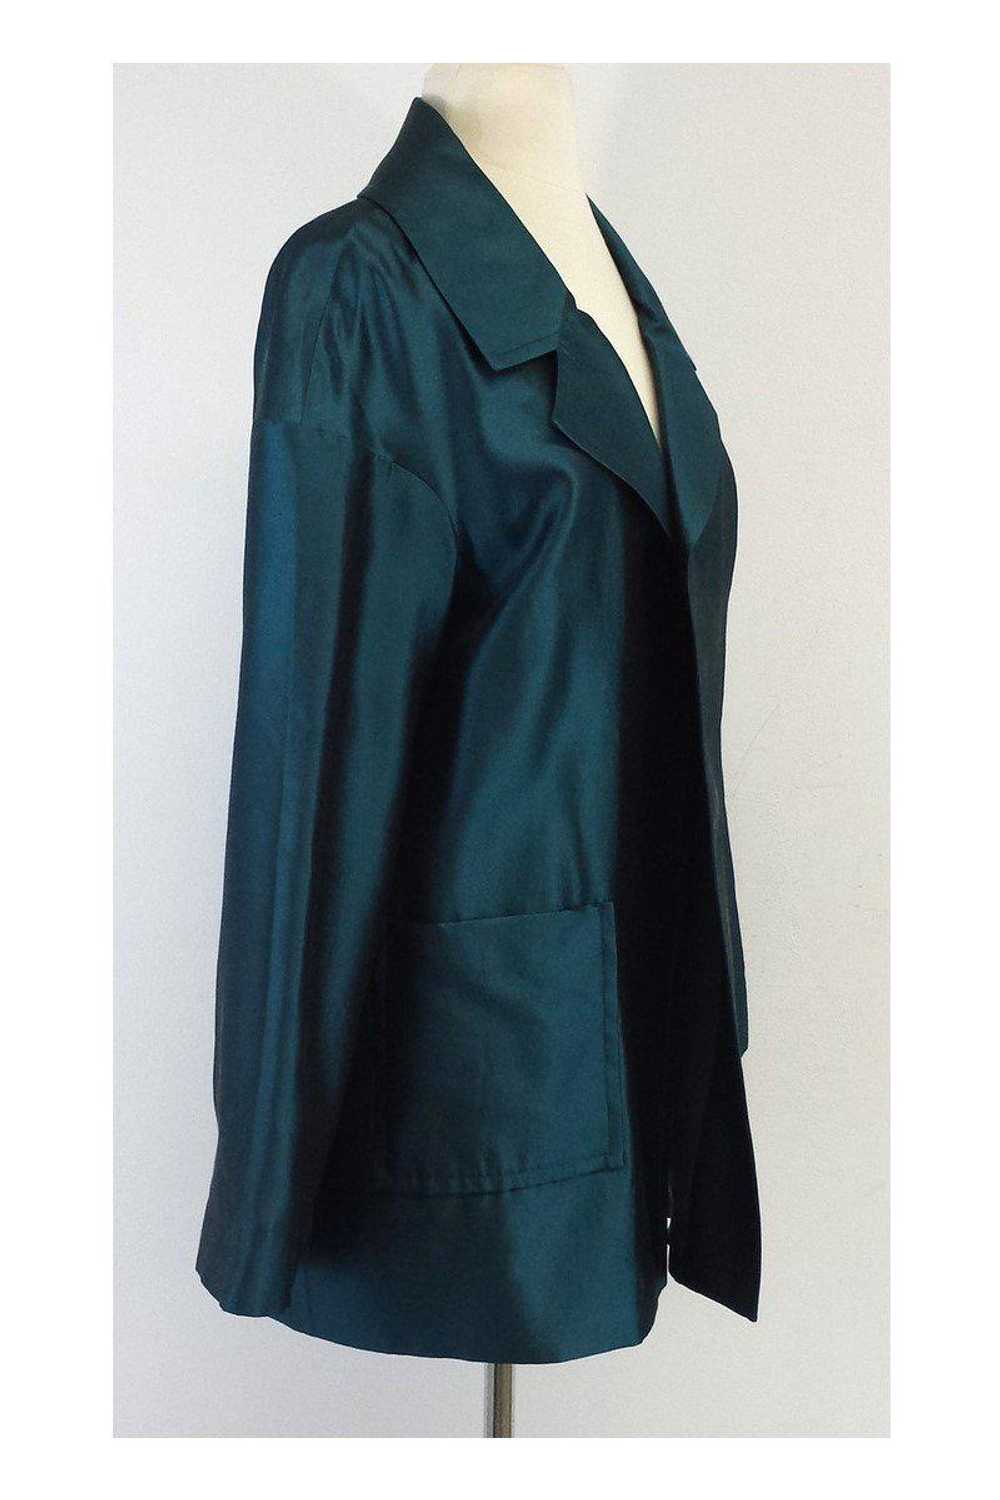 St. John Couture - Teal Silk & Wool Jacket Sz 12 - image 2